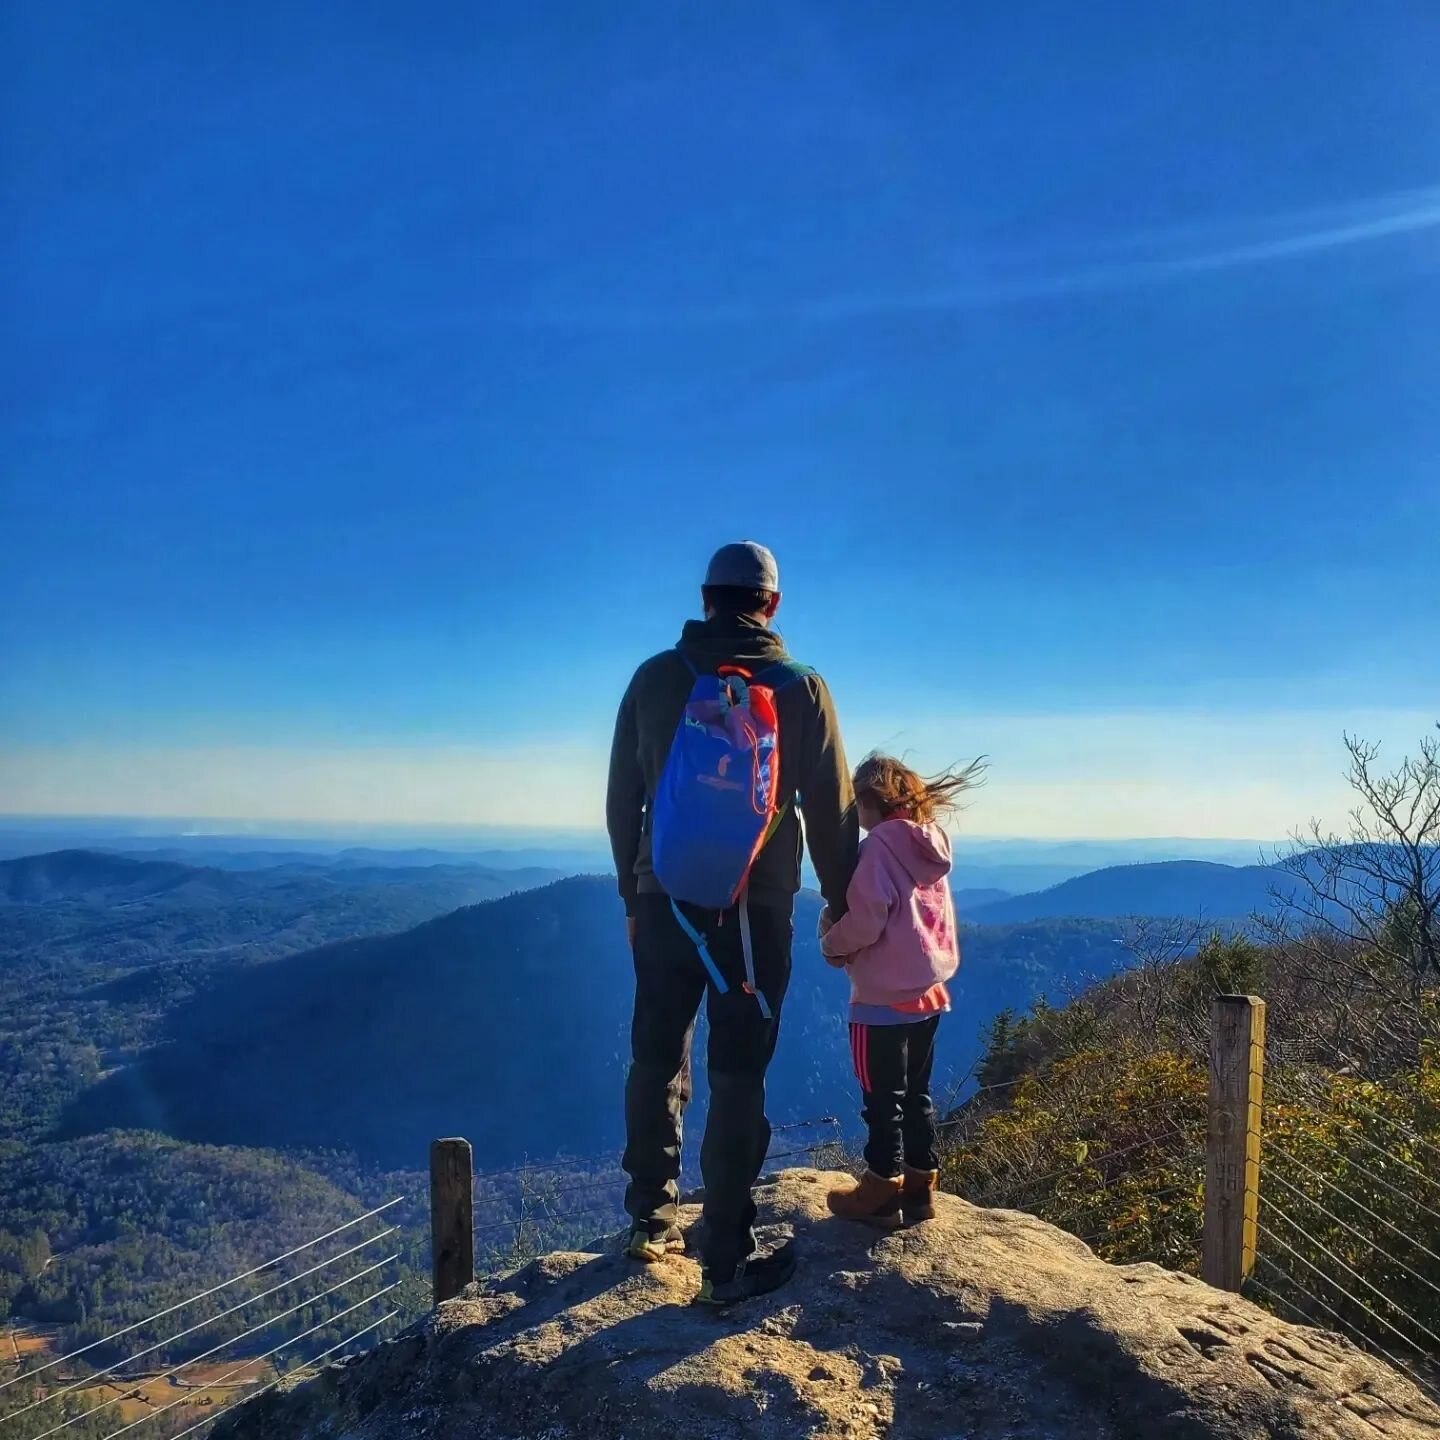 &ldquo;The best view comes after the hardest climb.&rdquo; ⛰️
📍Appalachian Trail, North Carolina, 2022

#vistavacations #vistavacay #vista #lavistavacay #lavista #appalachiantrail #appalachia #appalachian #appalachianmountains #blueridgemountains #b